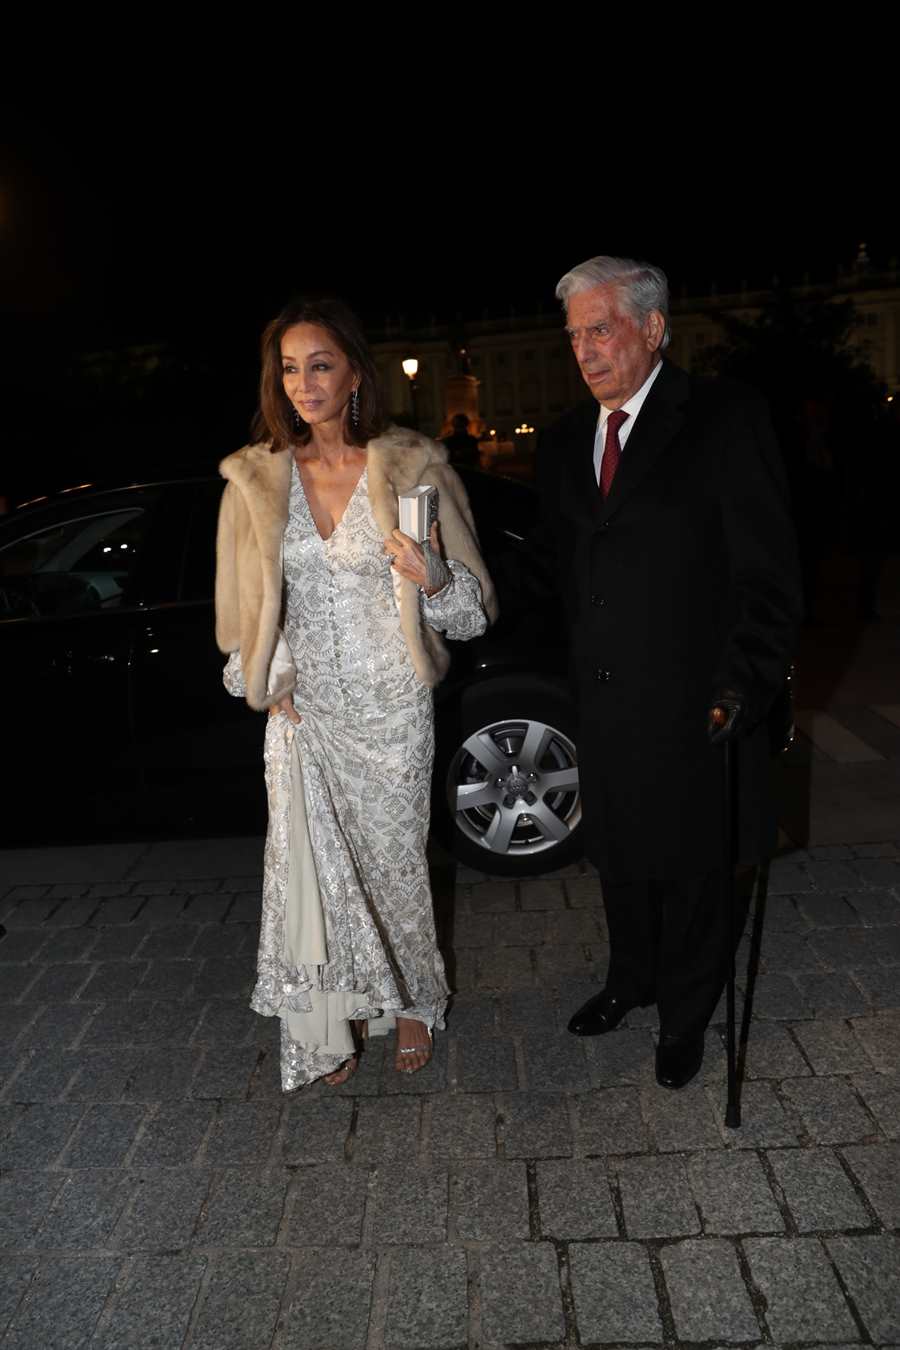 Isabel Preysler Mario Vargas Llosa